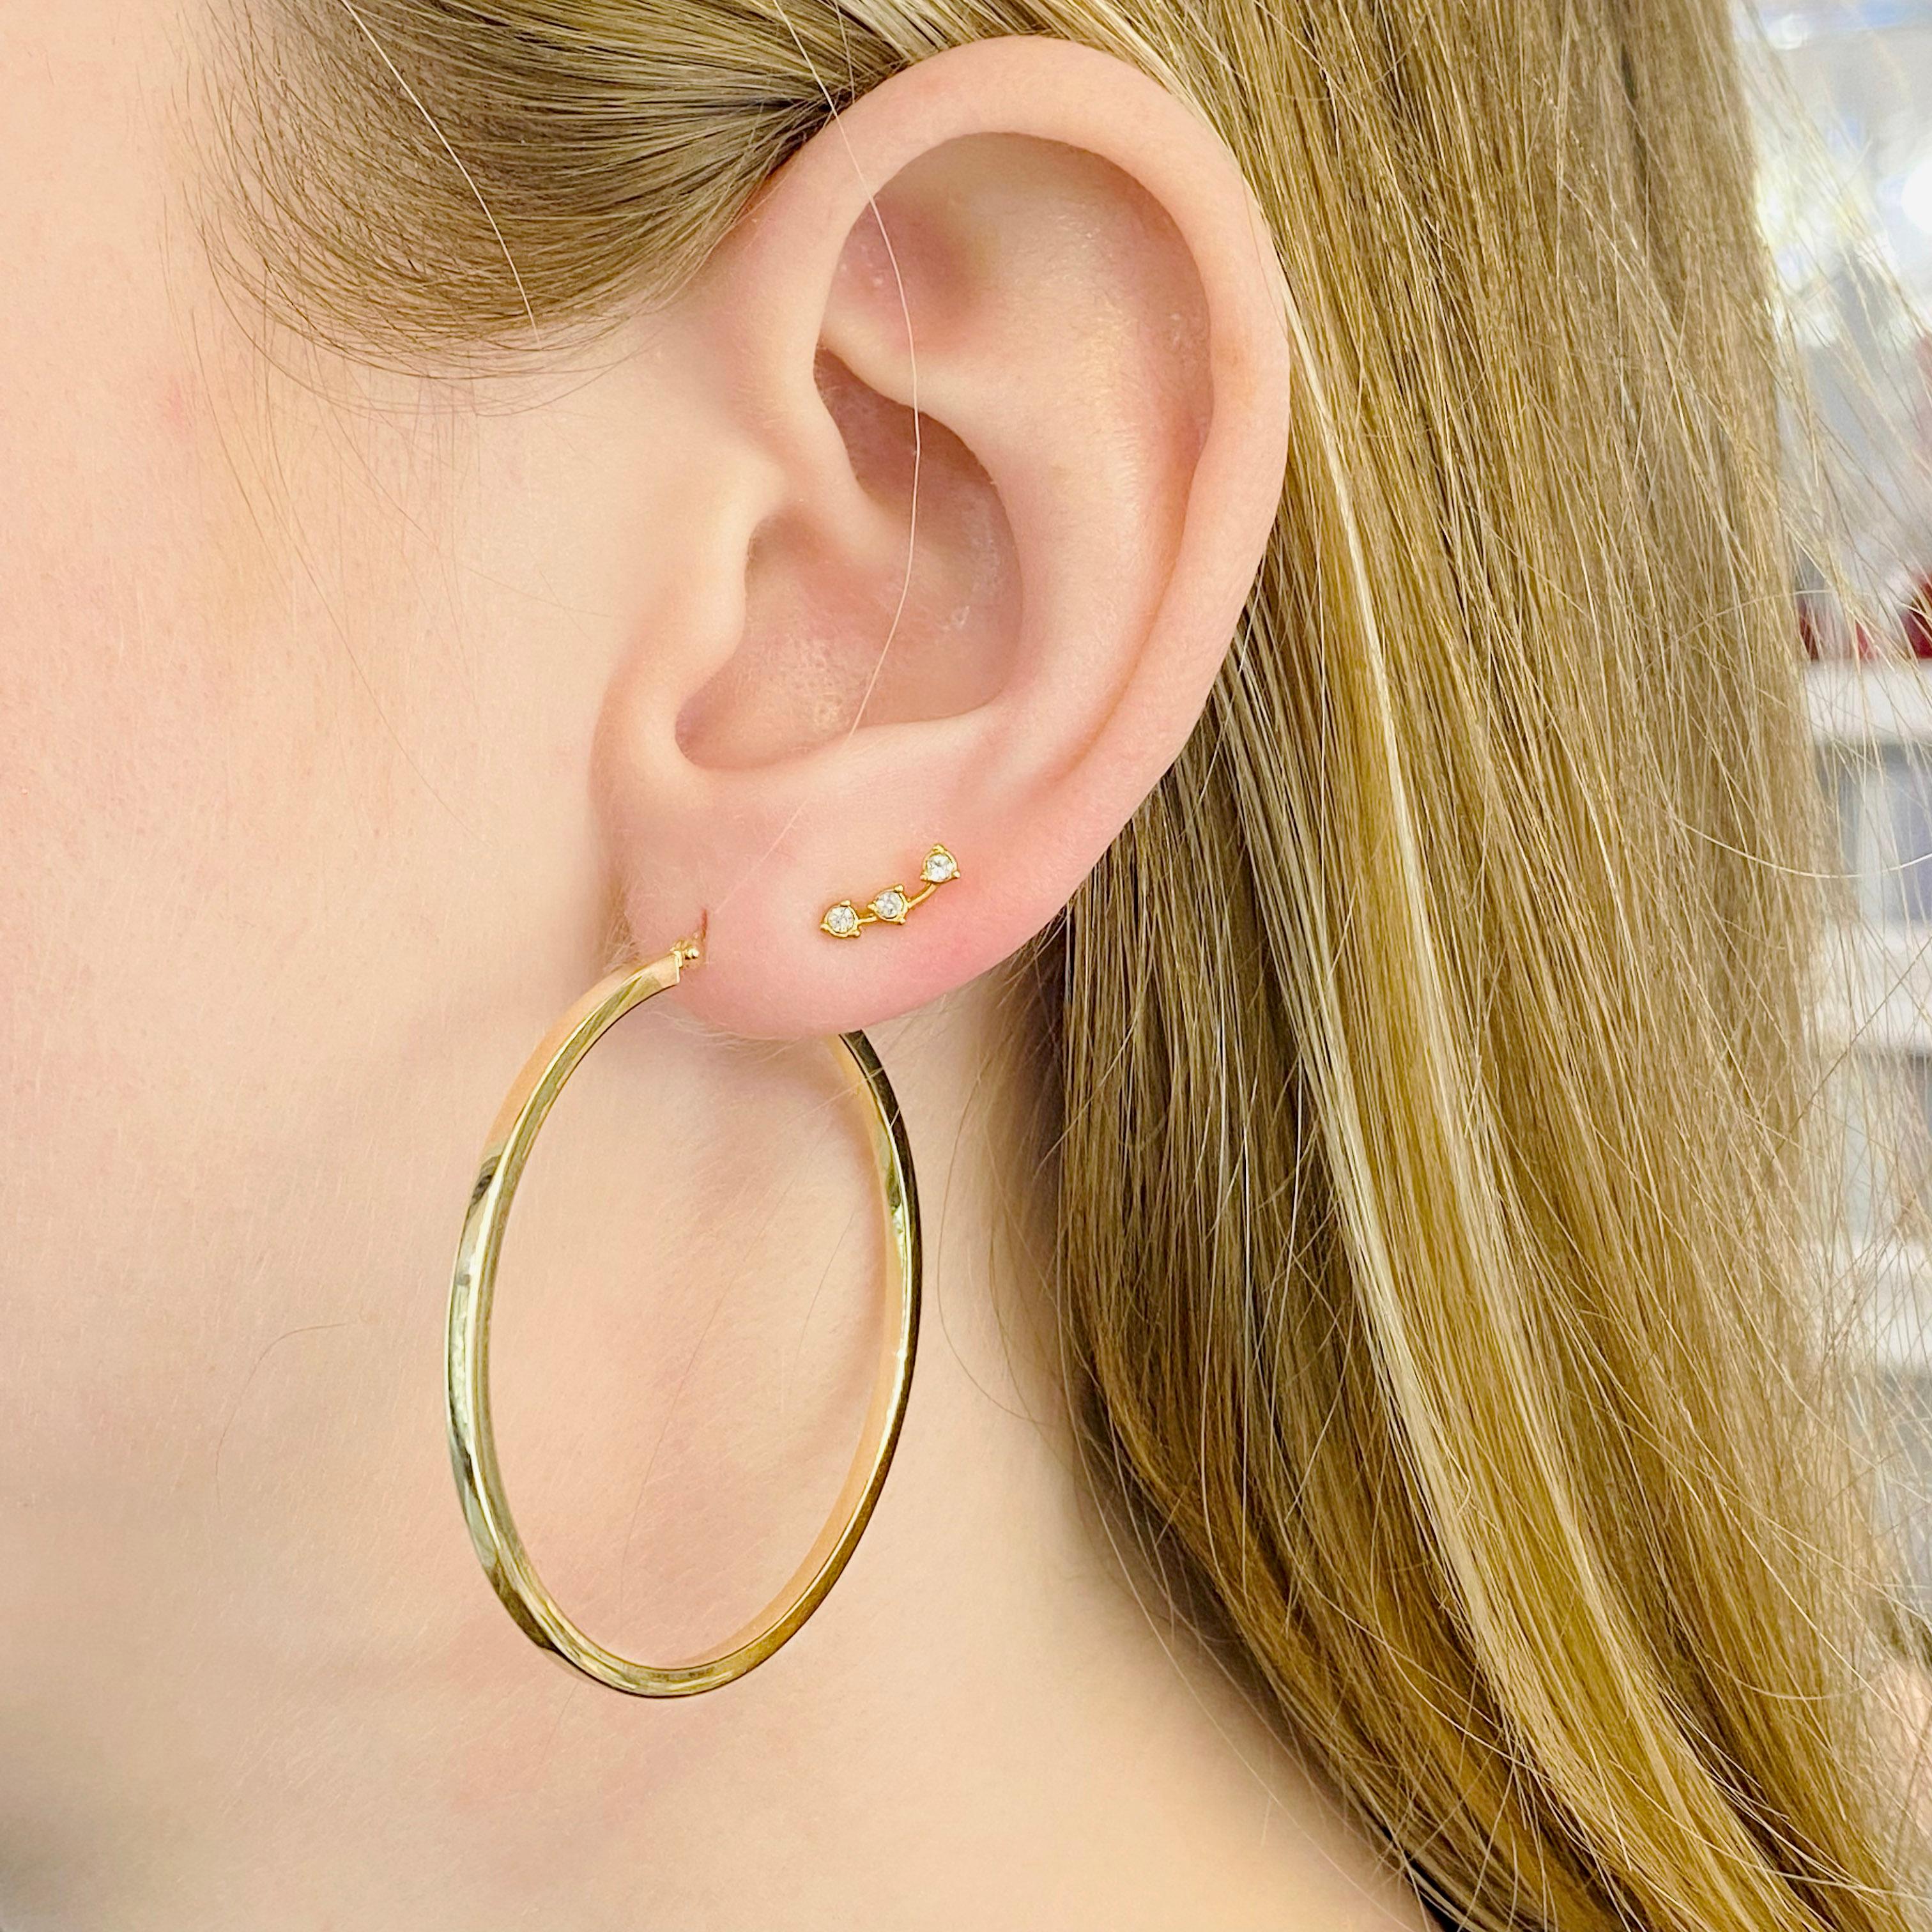 1.5 inch 14k gold hoop earrings